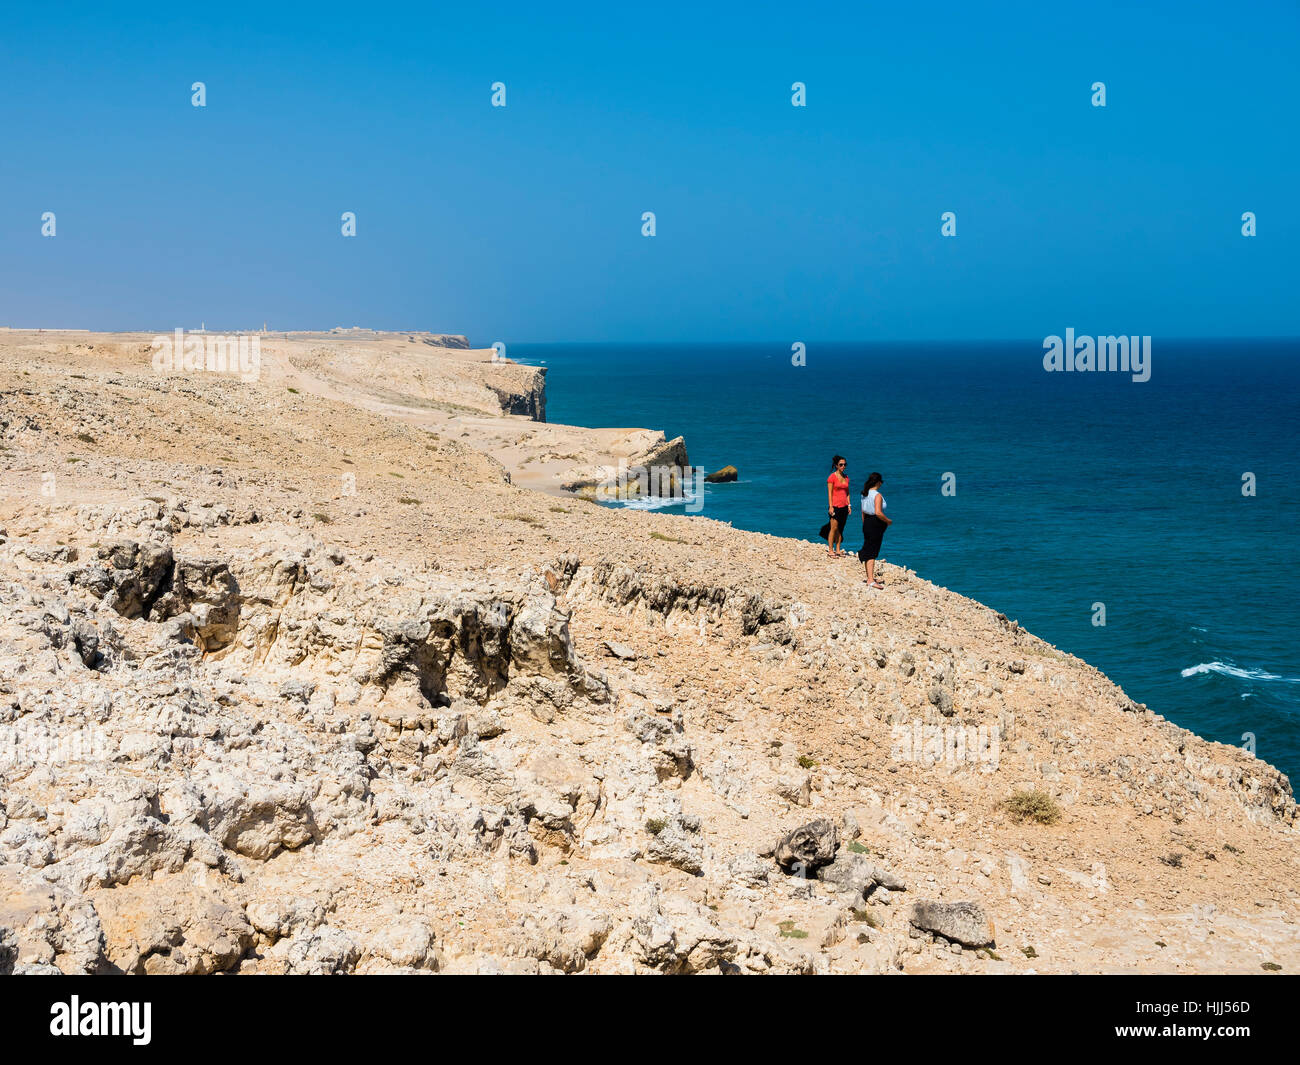 Oman, Ash Sharqiyah, Ad Daffah, two women standing at cliff coast Stock Photo